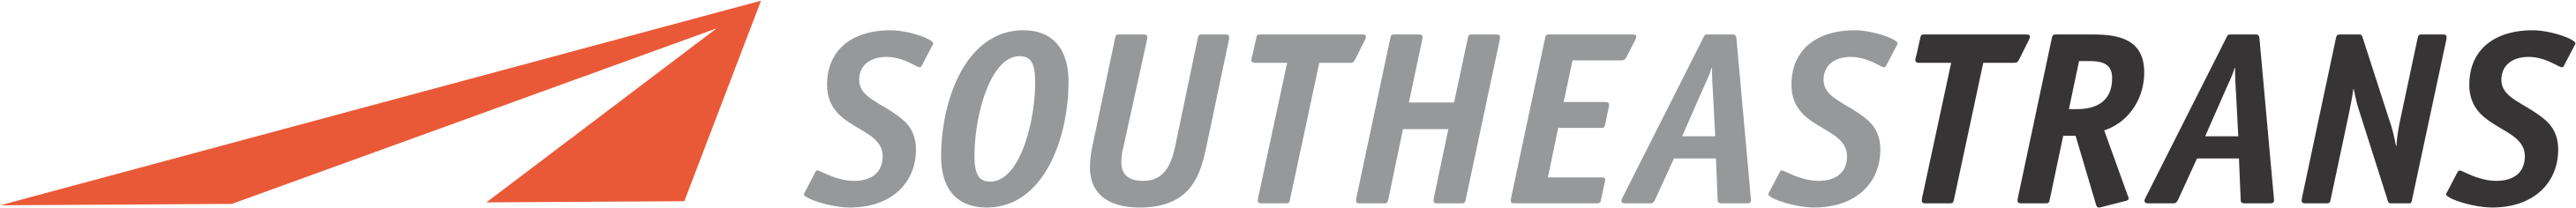 Southeastrans_logo